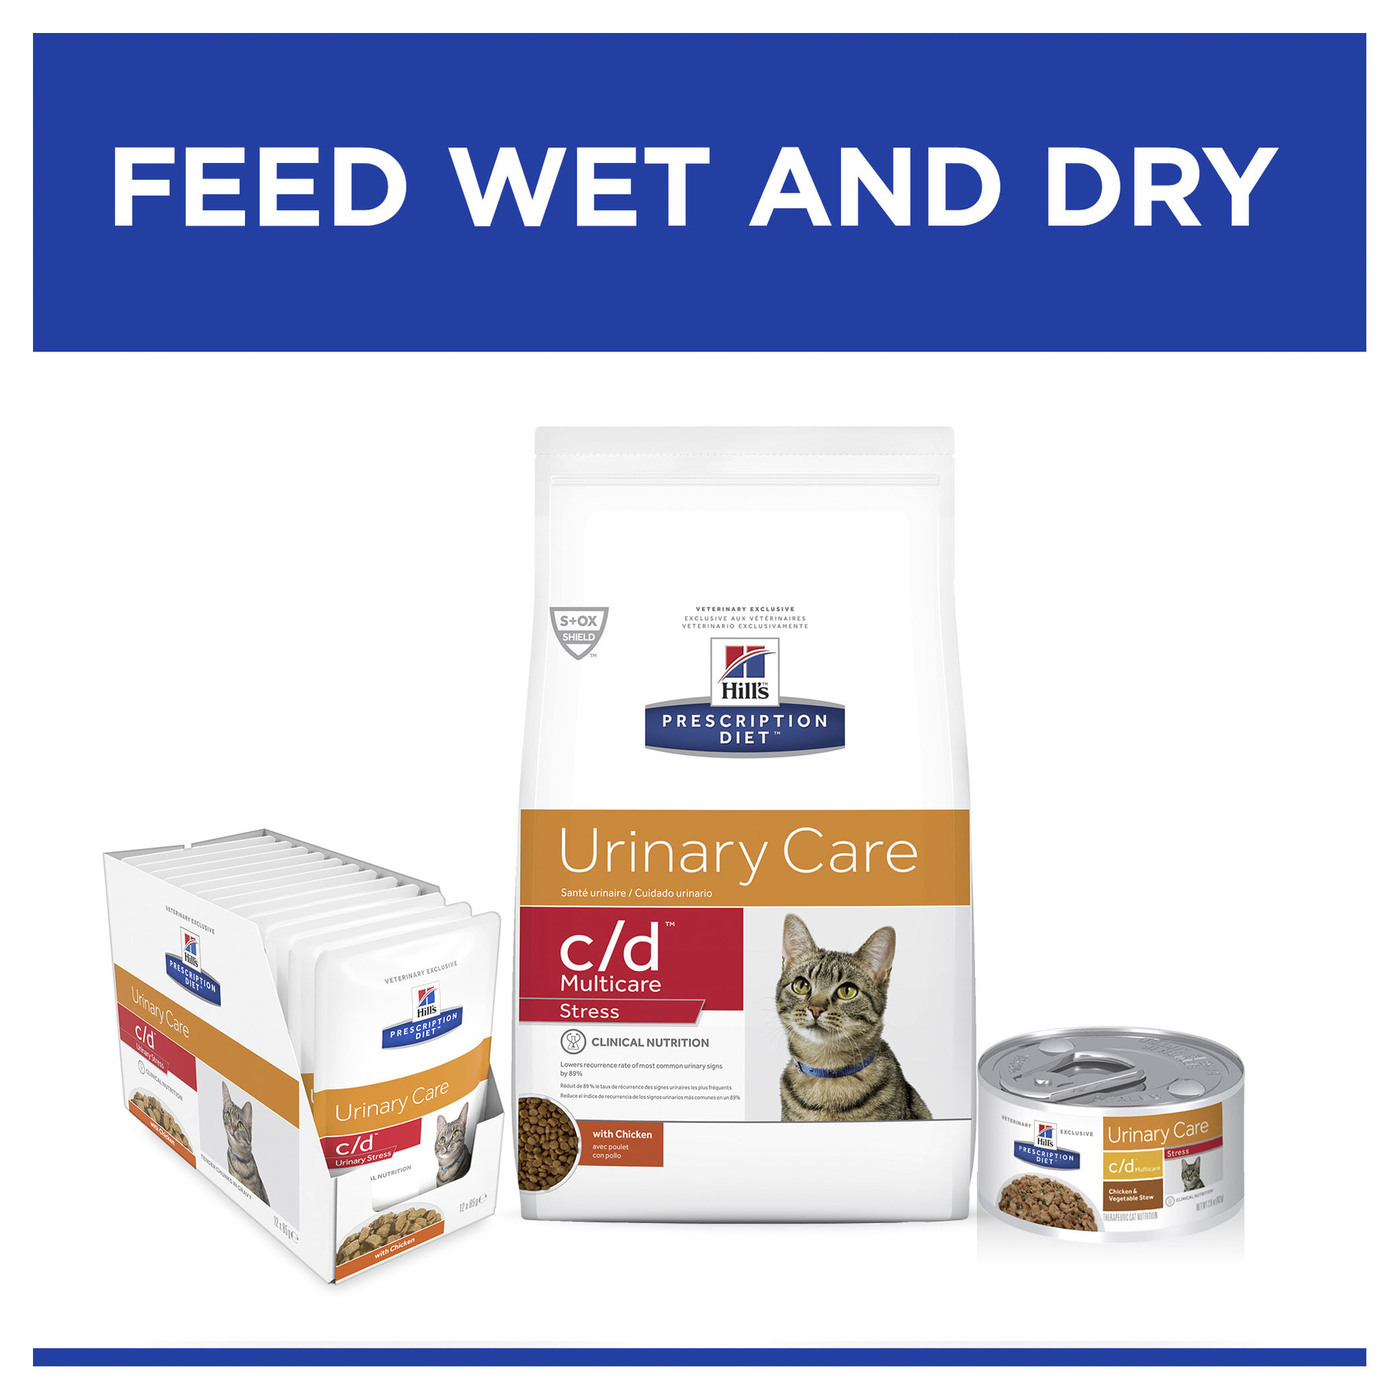 Hills Prescription Diet c/d Multicare Stress Urinary Care Dry Cat Food image 3